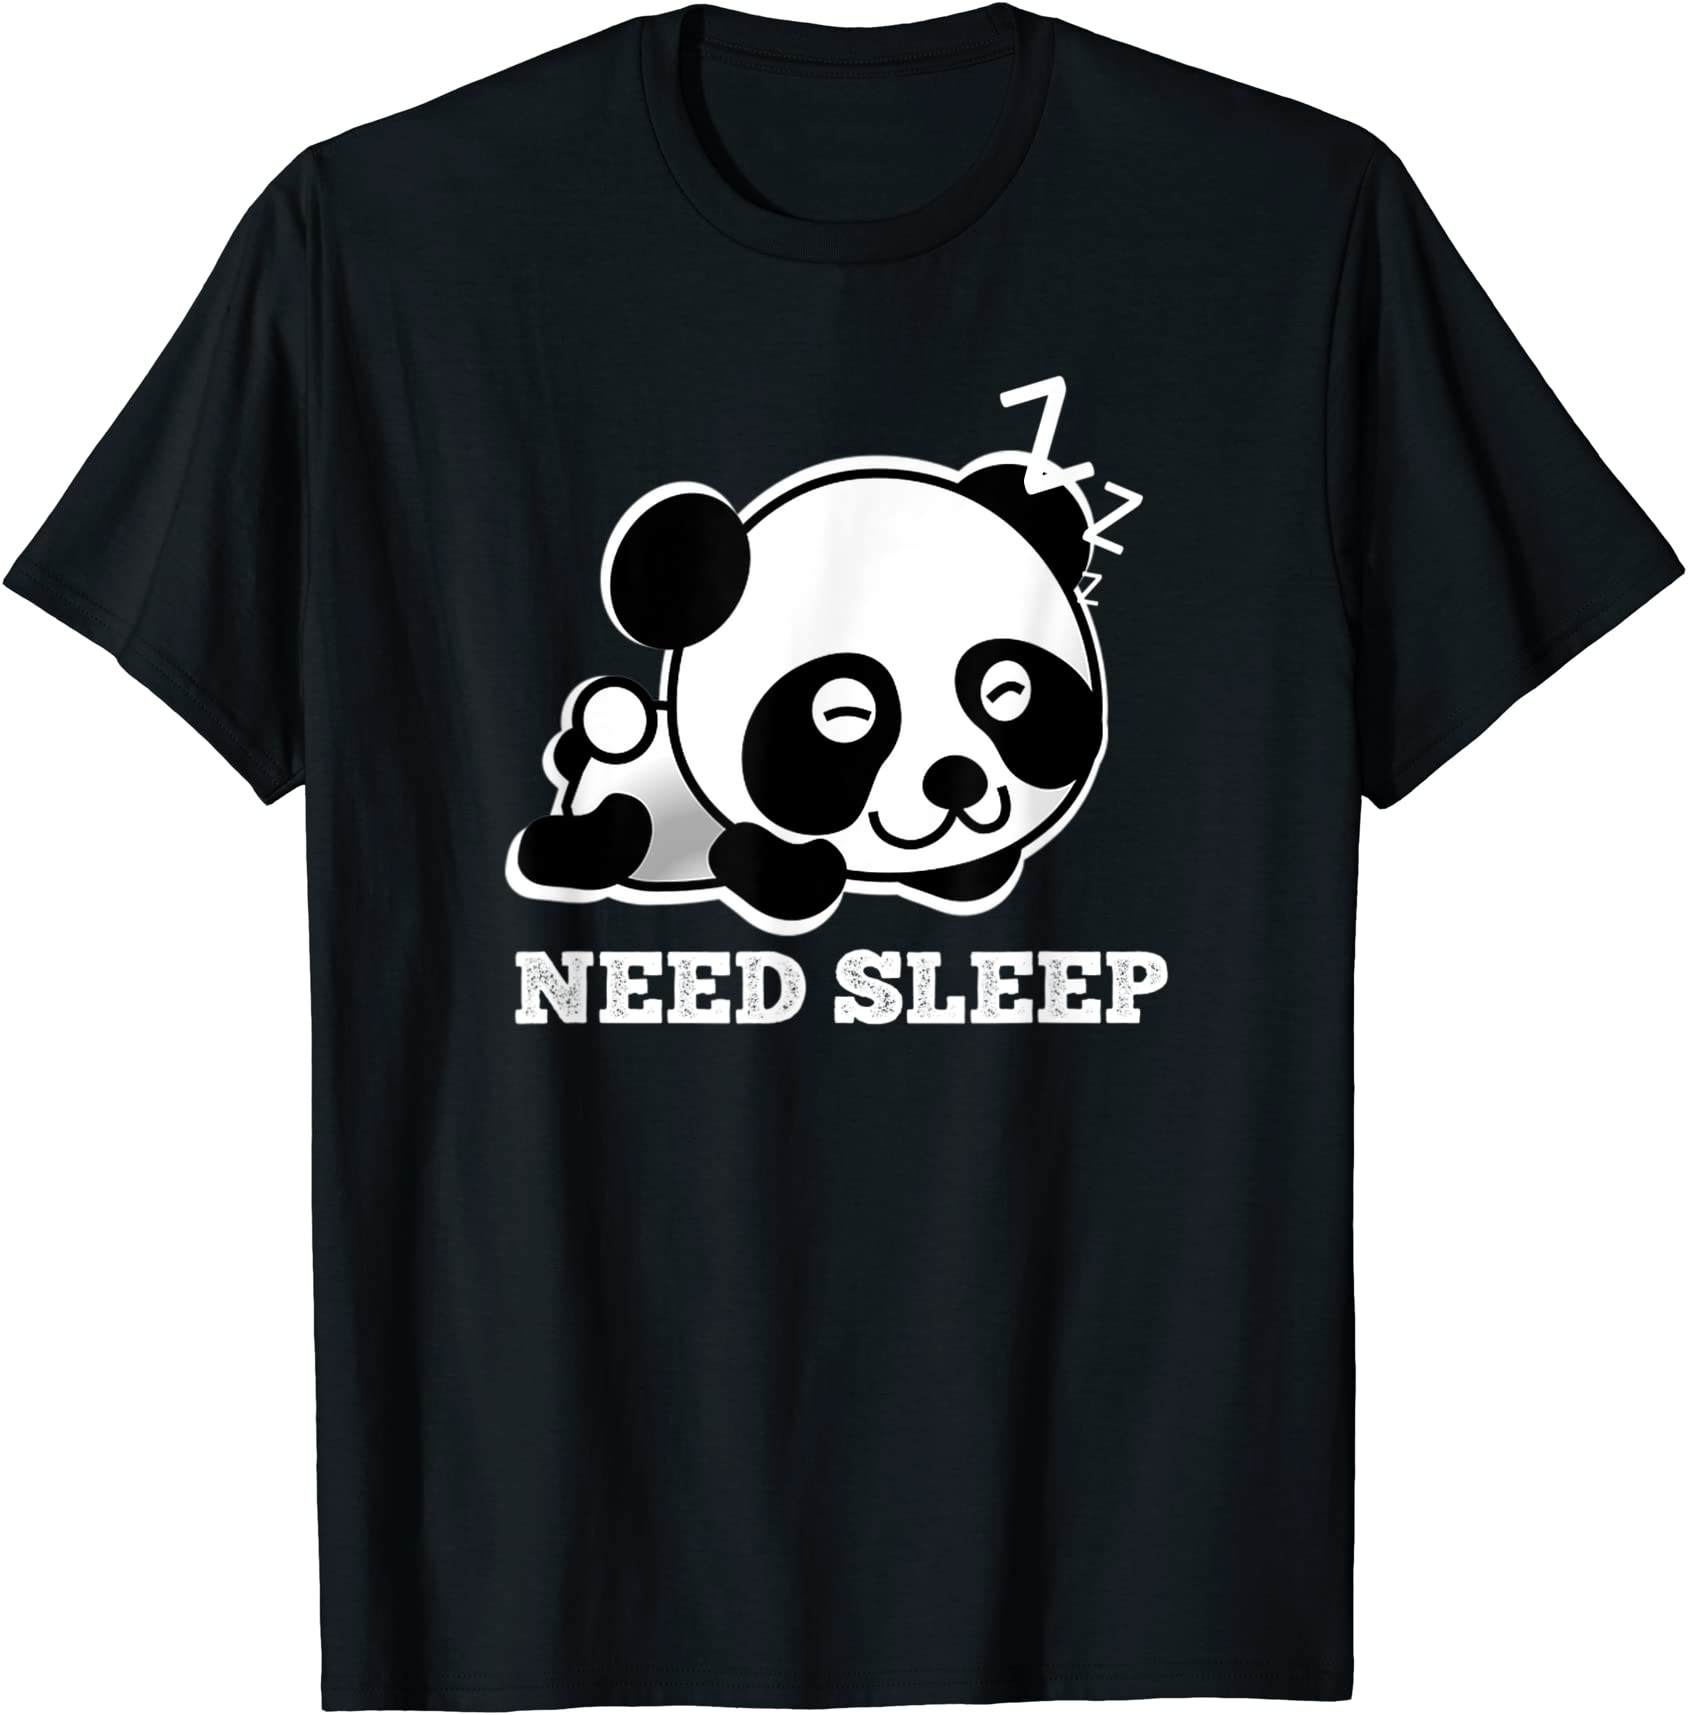 Panda Sleep Nightshirt Pajamas Pyjamas Nightdress Loungwear T Shirt Men Buy T Shirt Designs 